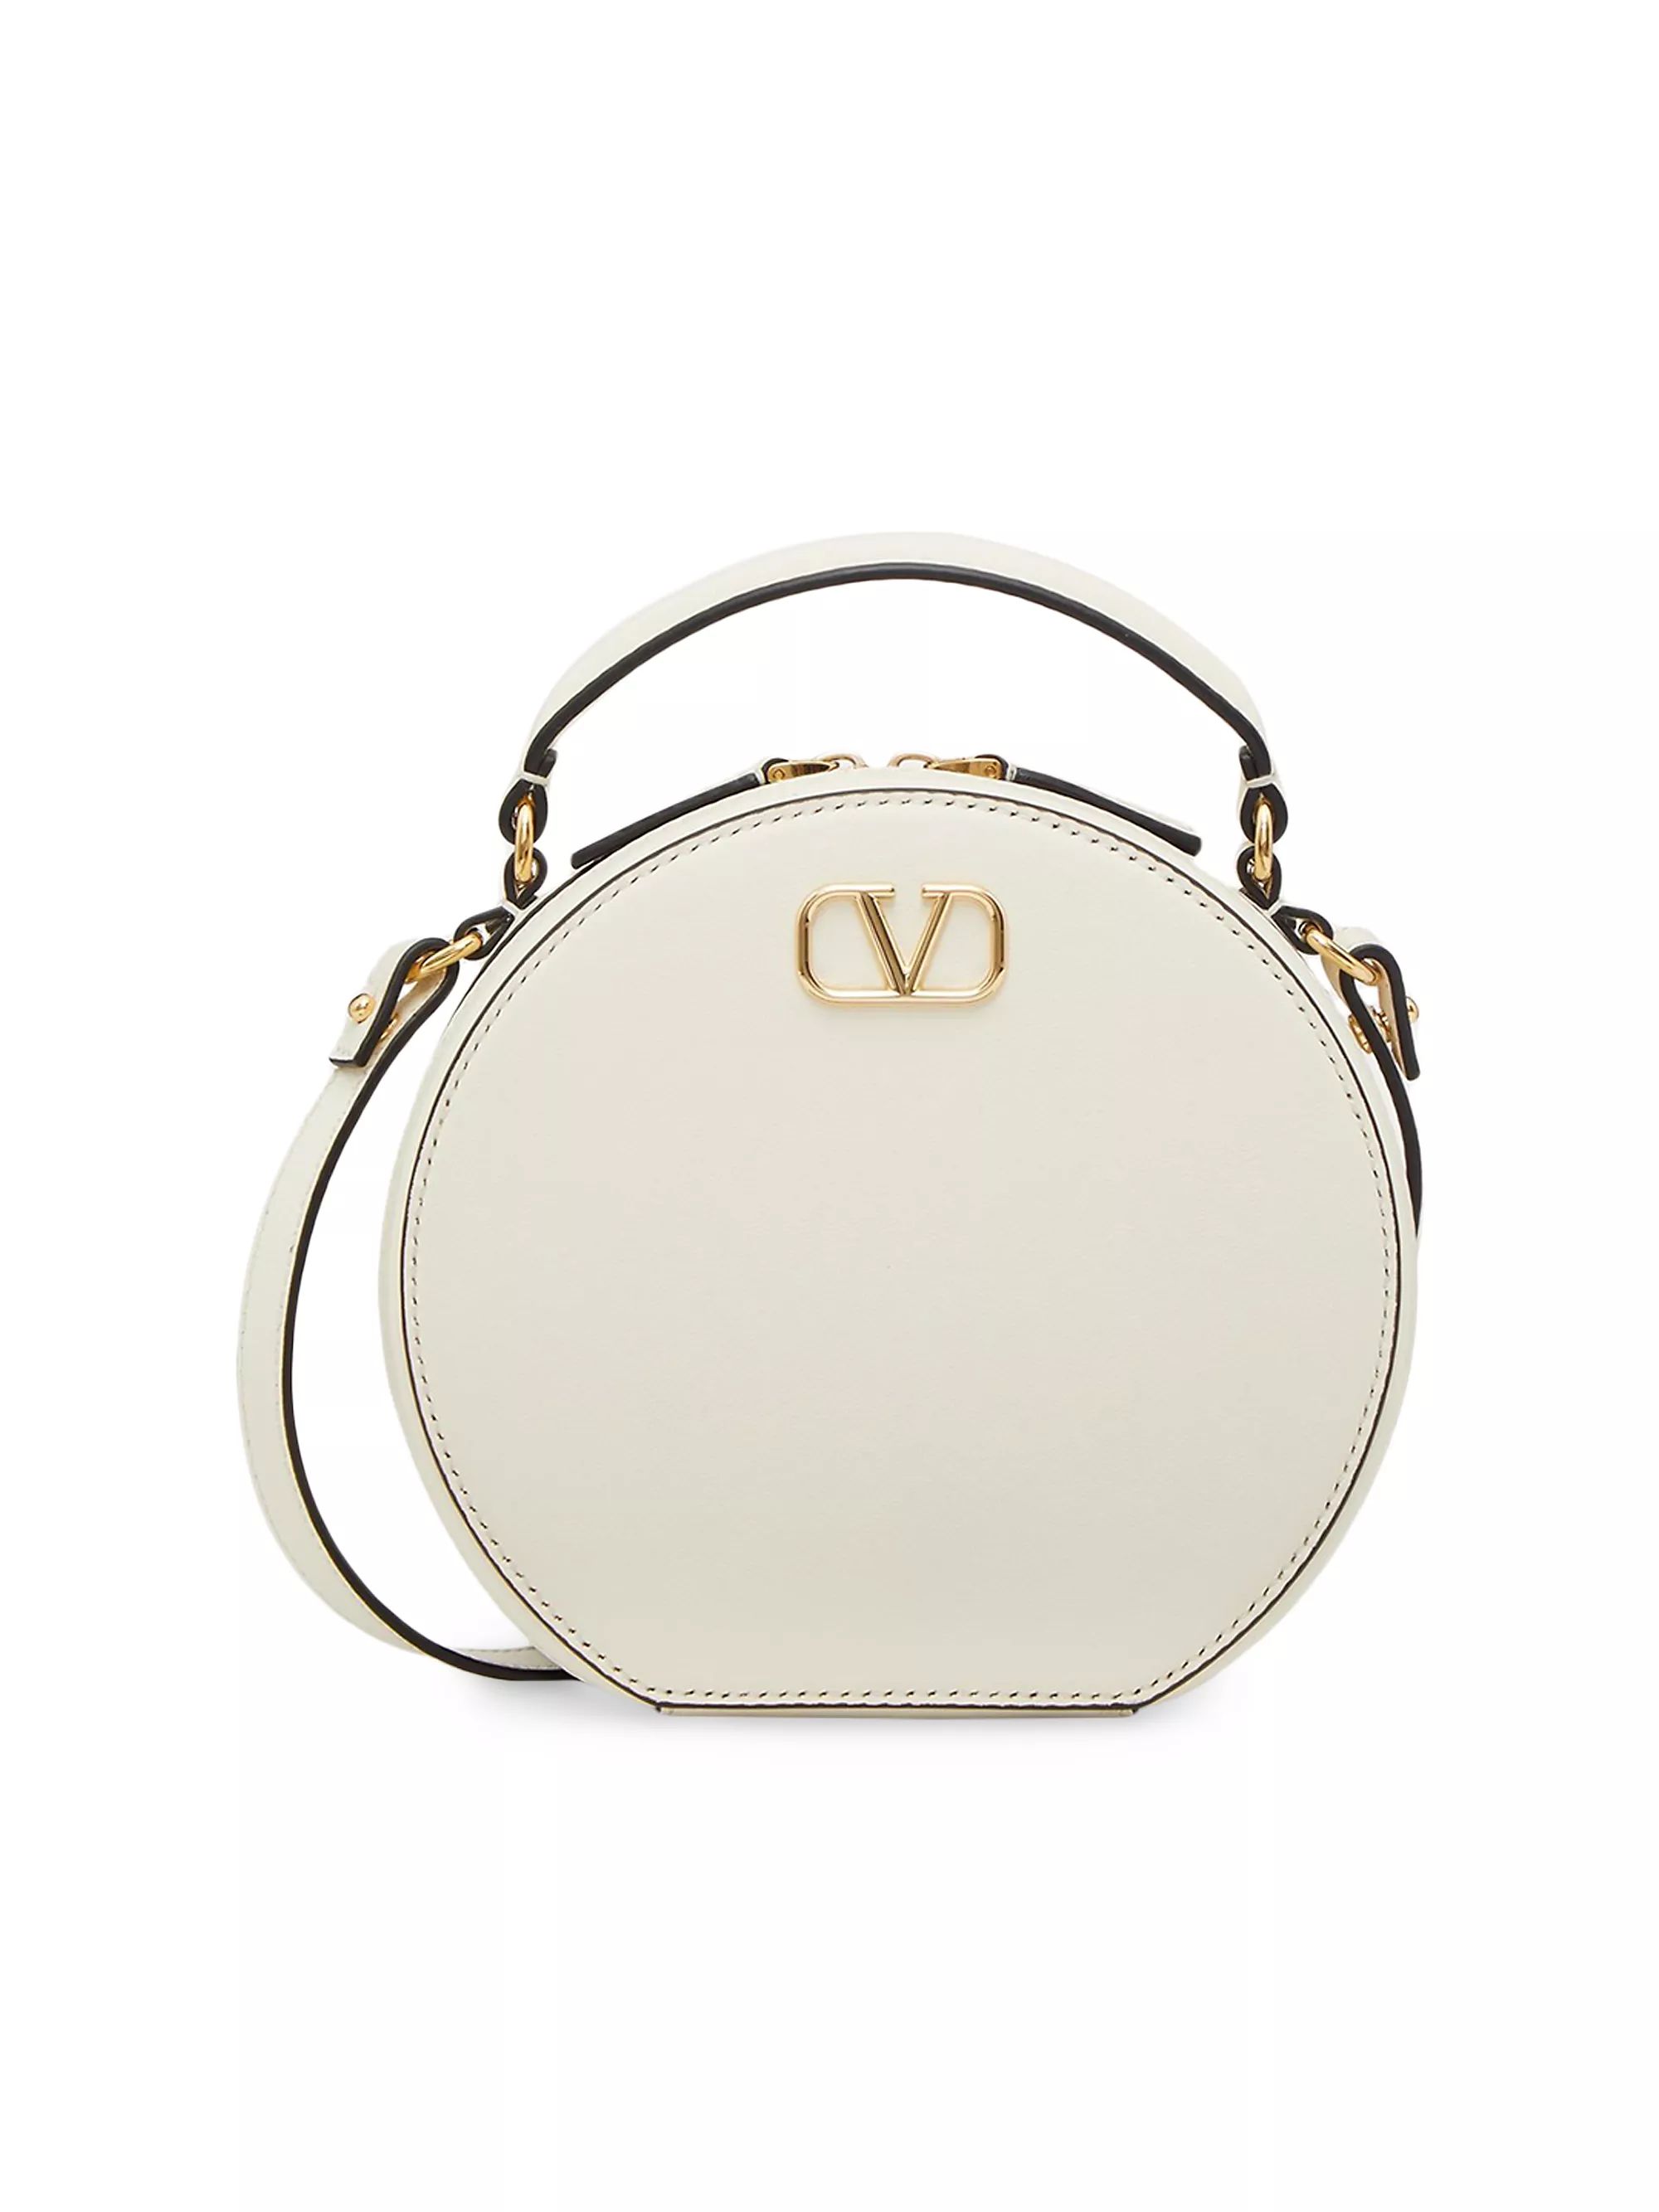 VLogo Signature Calfskin Mini Bag | Saks Fifth Avenue